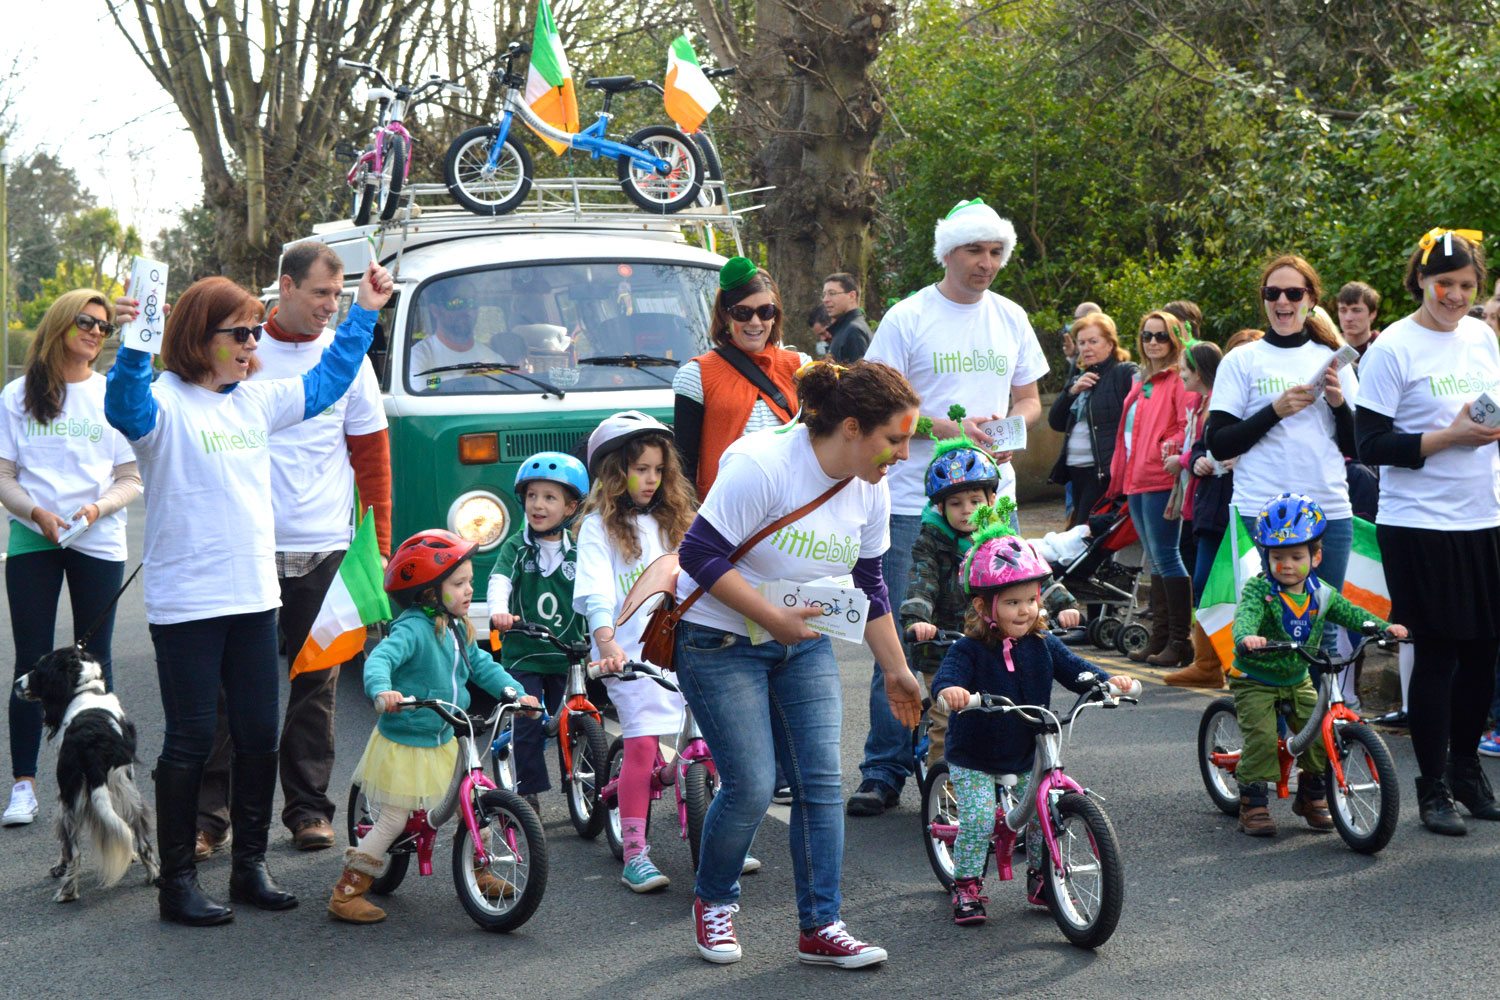 LittleBig bikes at the St Patrick's Day parade